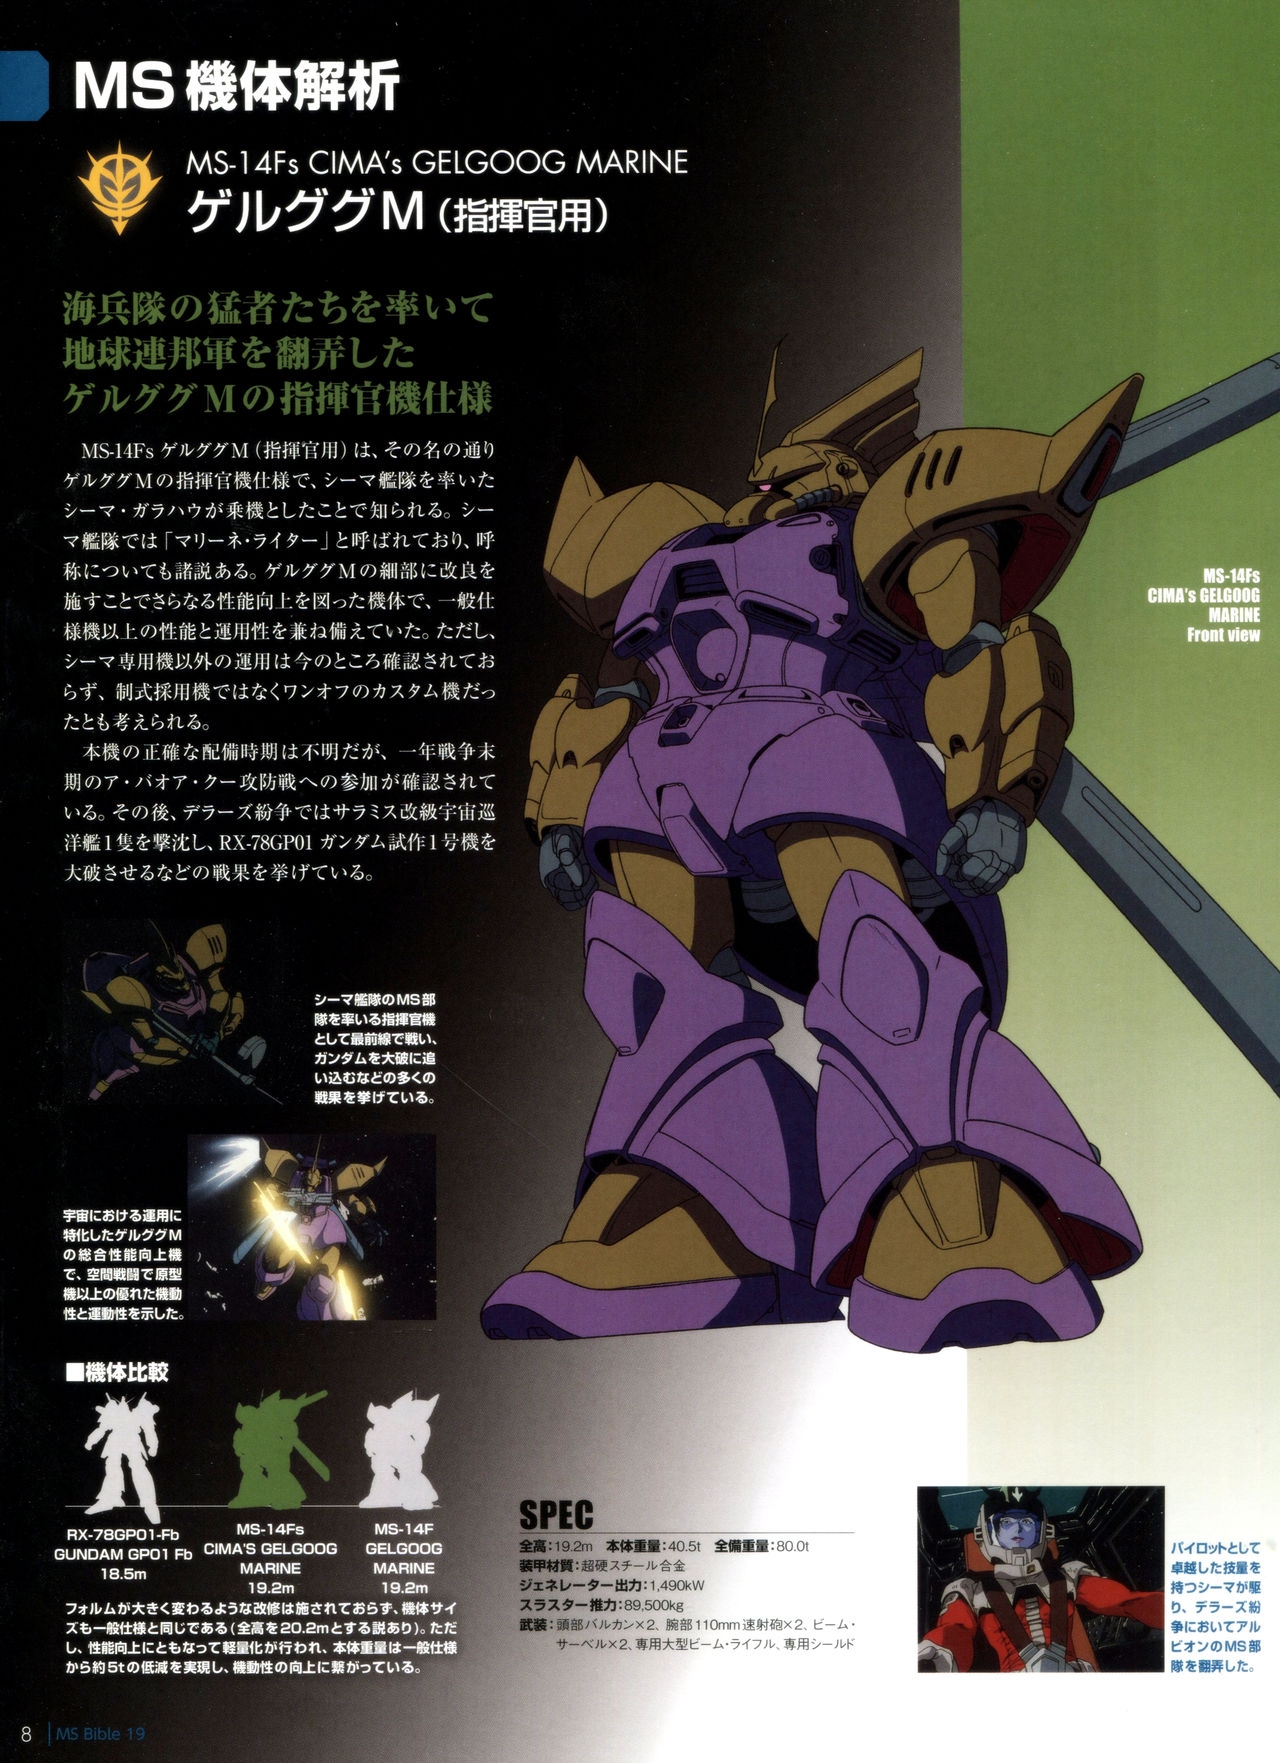 Gundam Mobile Suit Bible 19 9